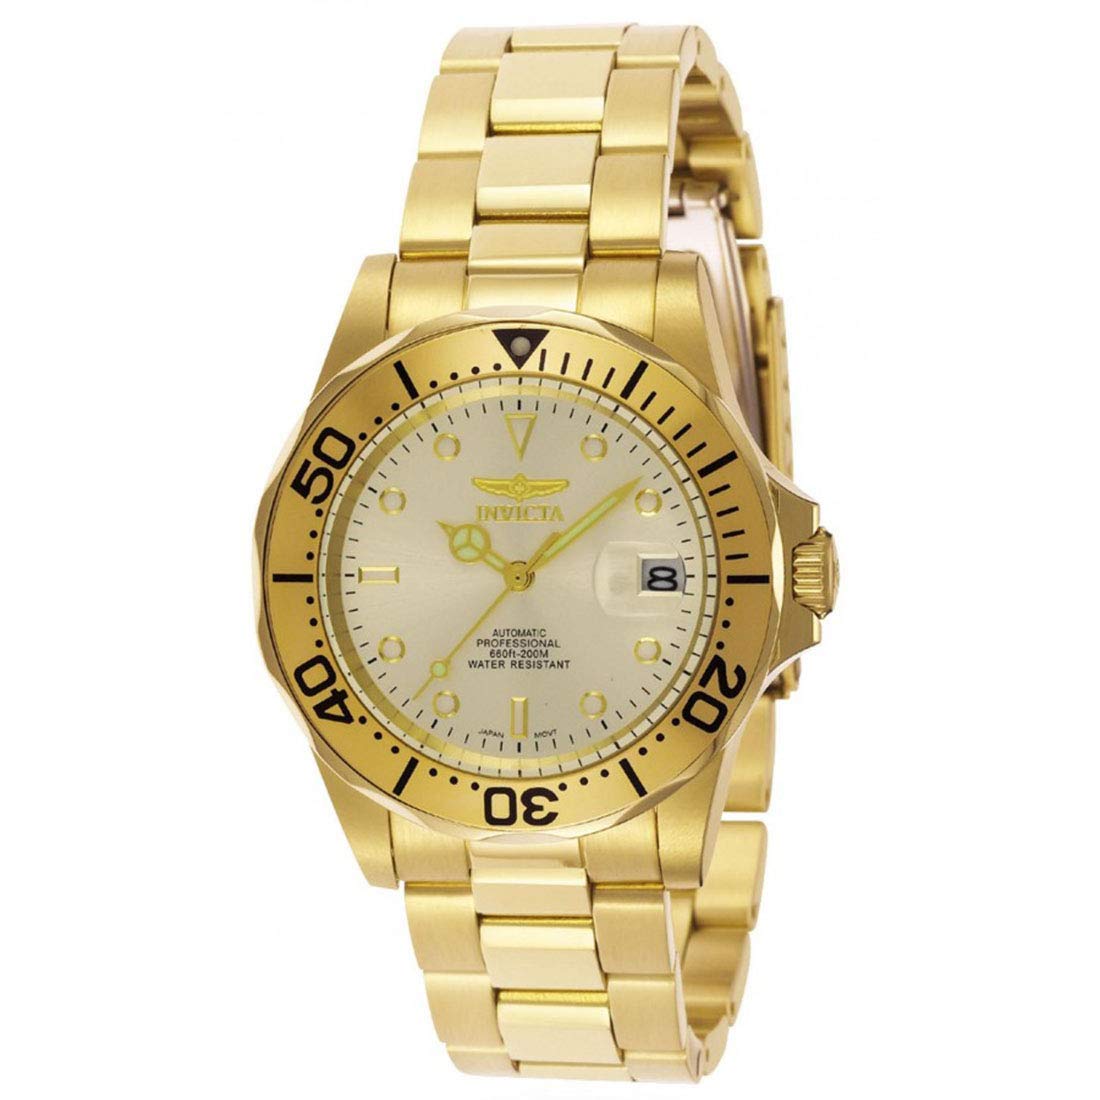 Invicta Men's 9618 Pro Diver Collection Automatic Watch